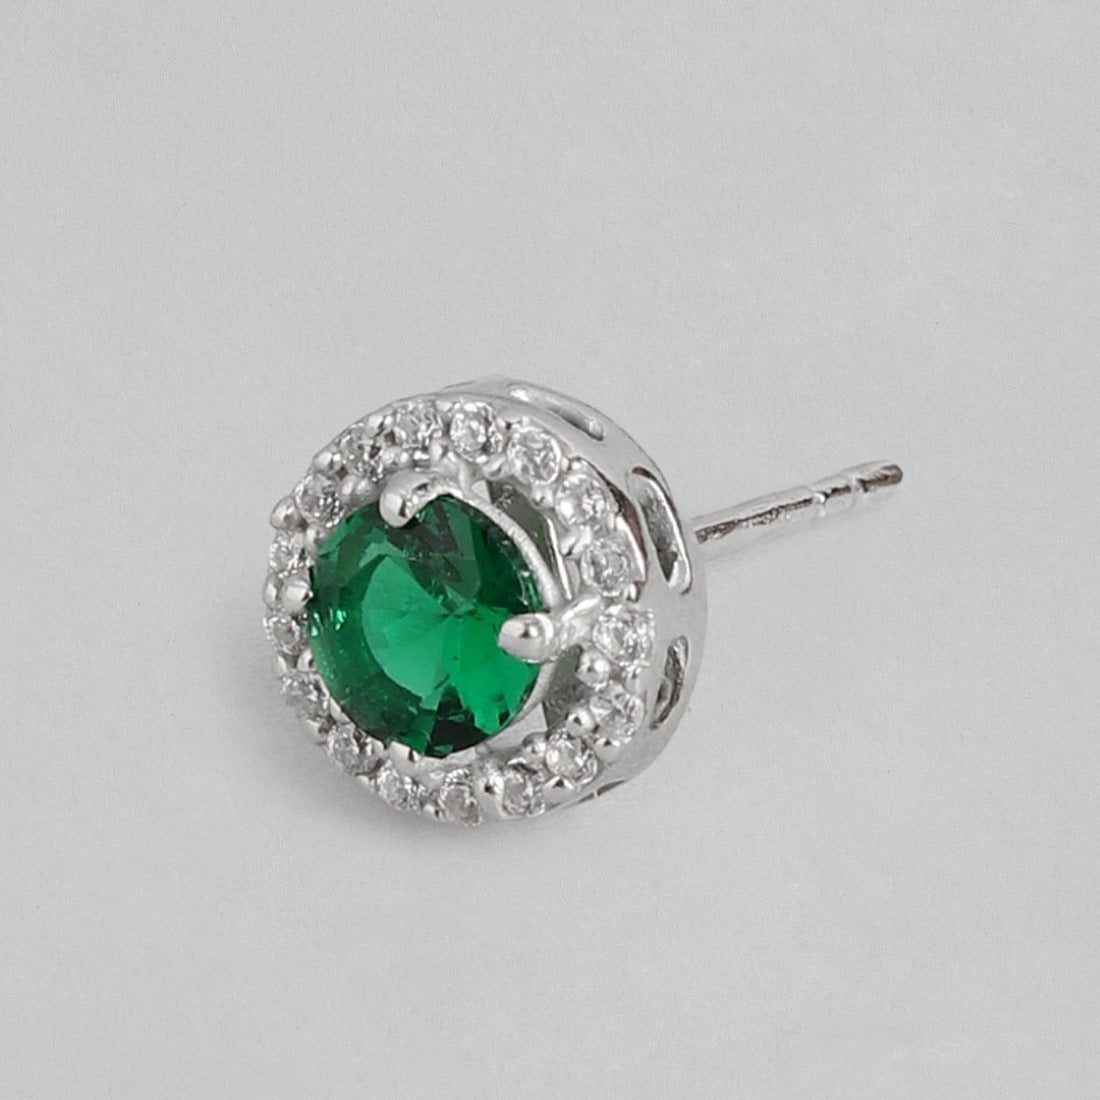 Emerald Elegance 925 Sterling Silver Green Cubic Zirconia Stud Earrings